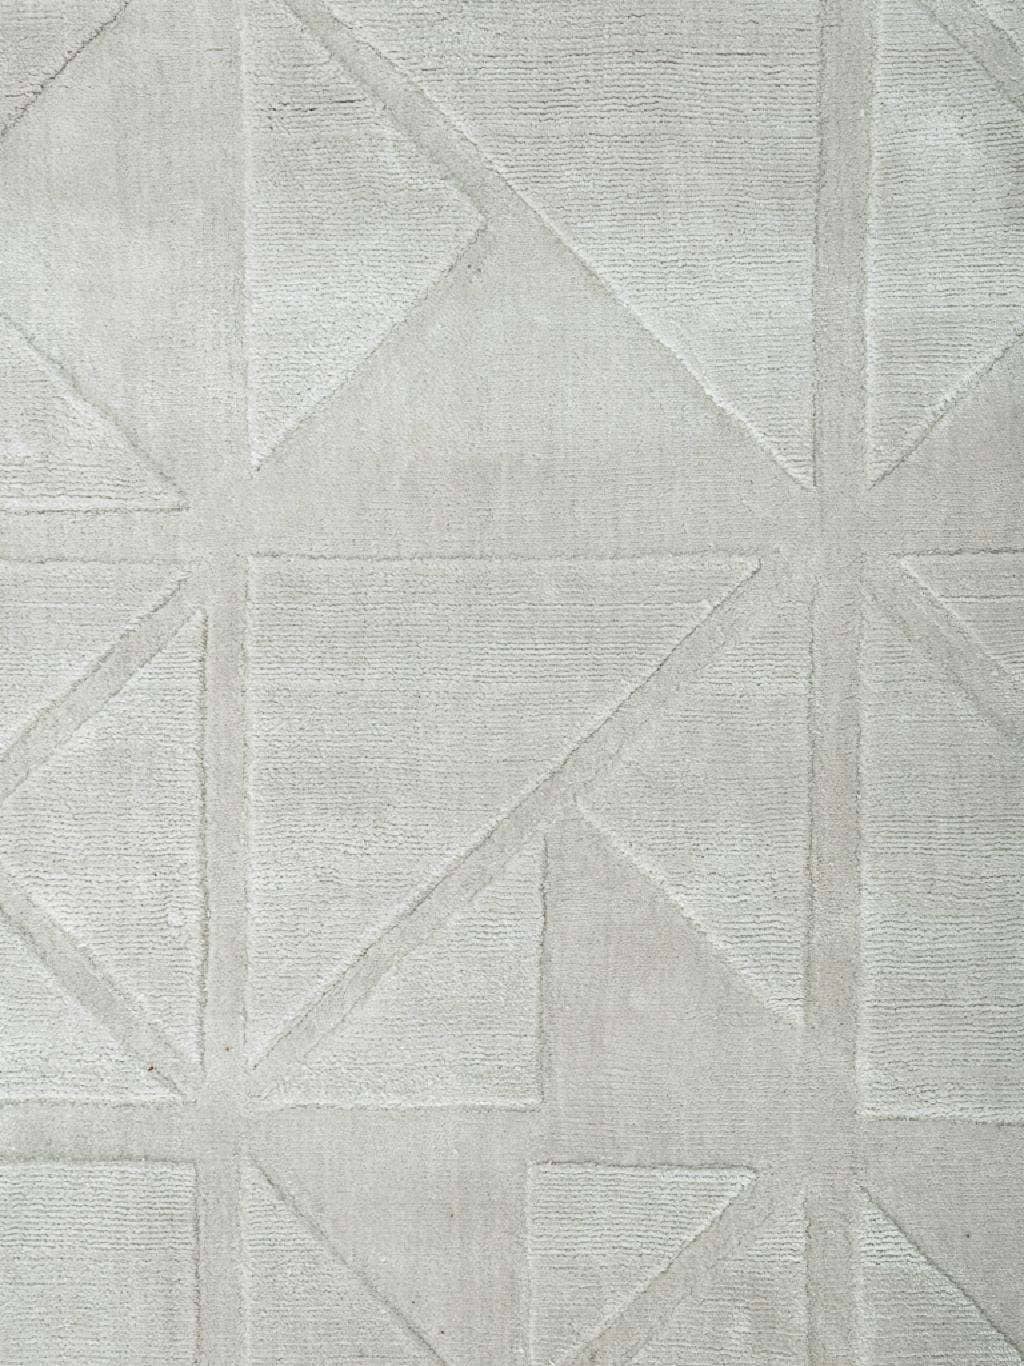 Tapete Indiano Karev Geométrico Vintage Off White 2,50 x 3,00m